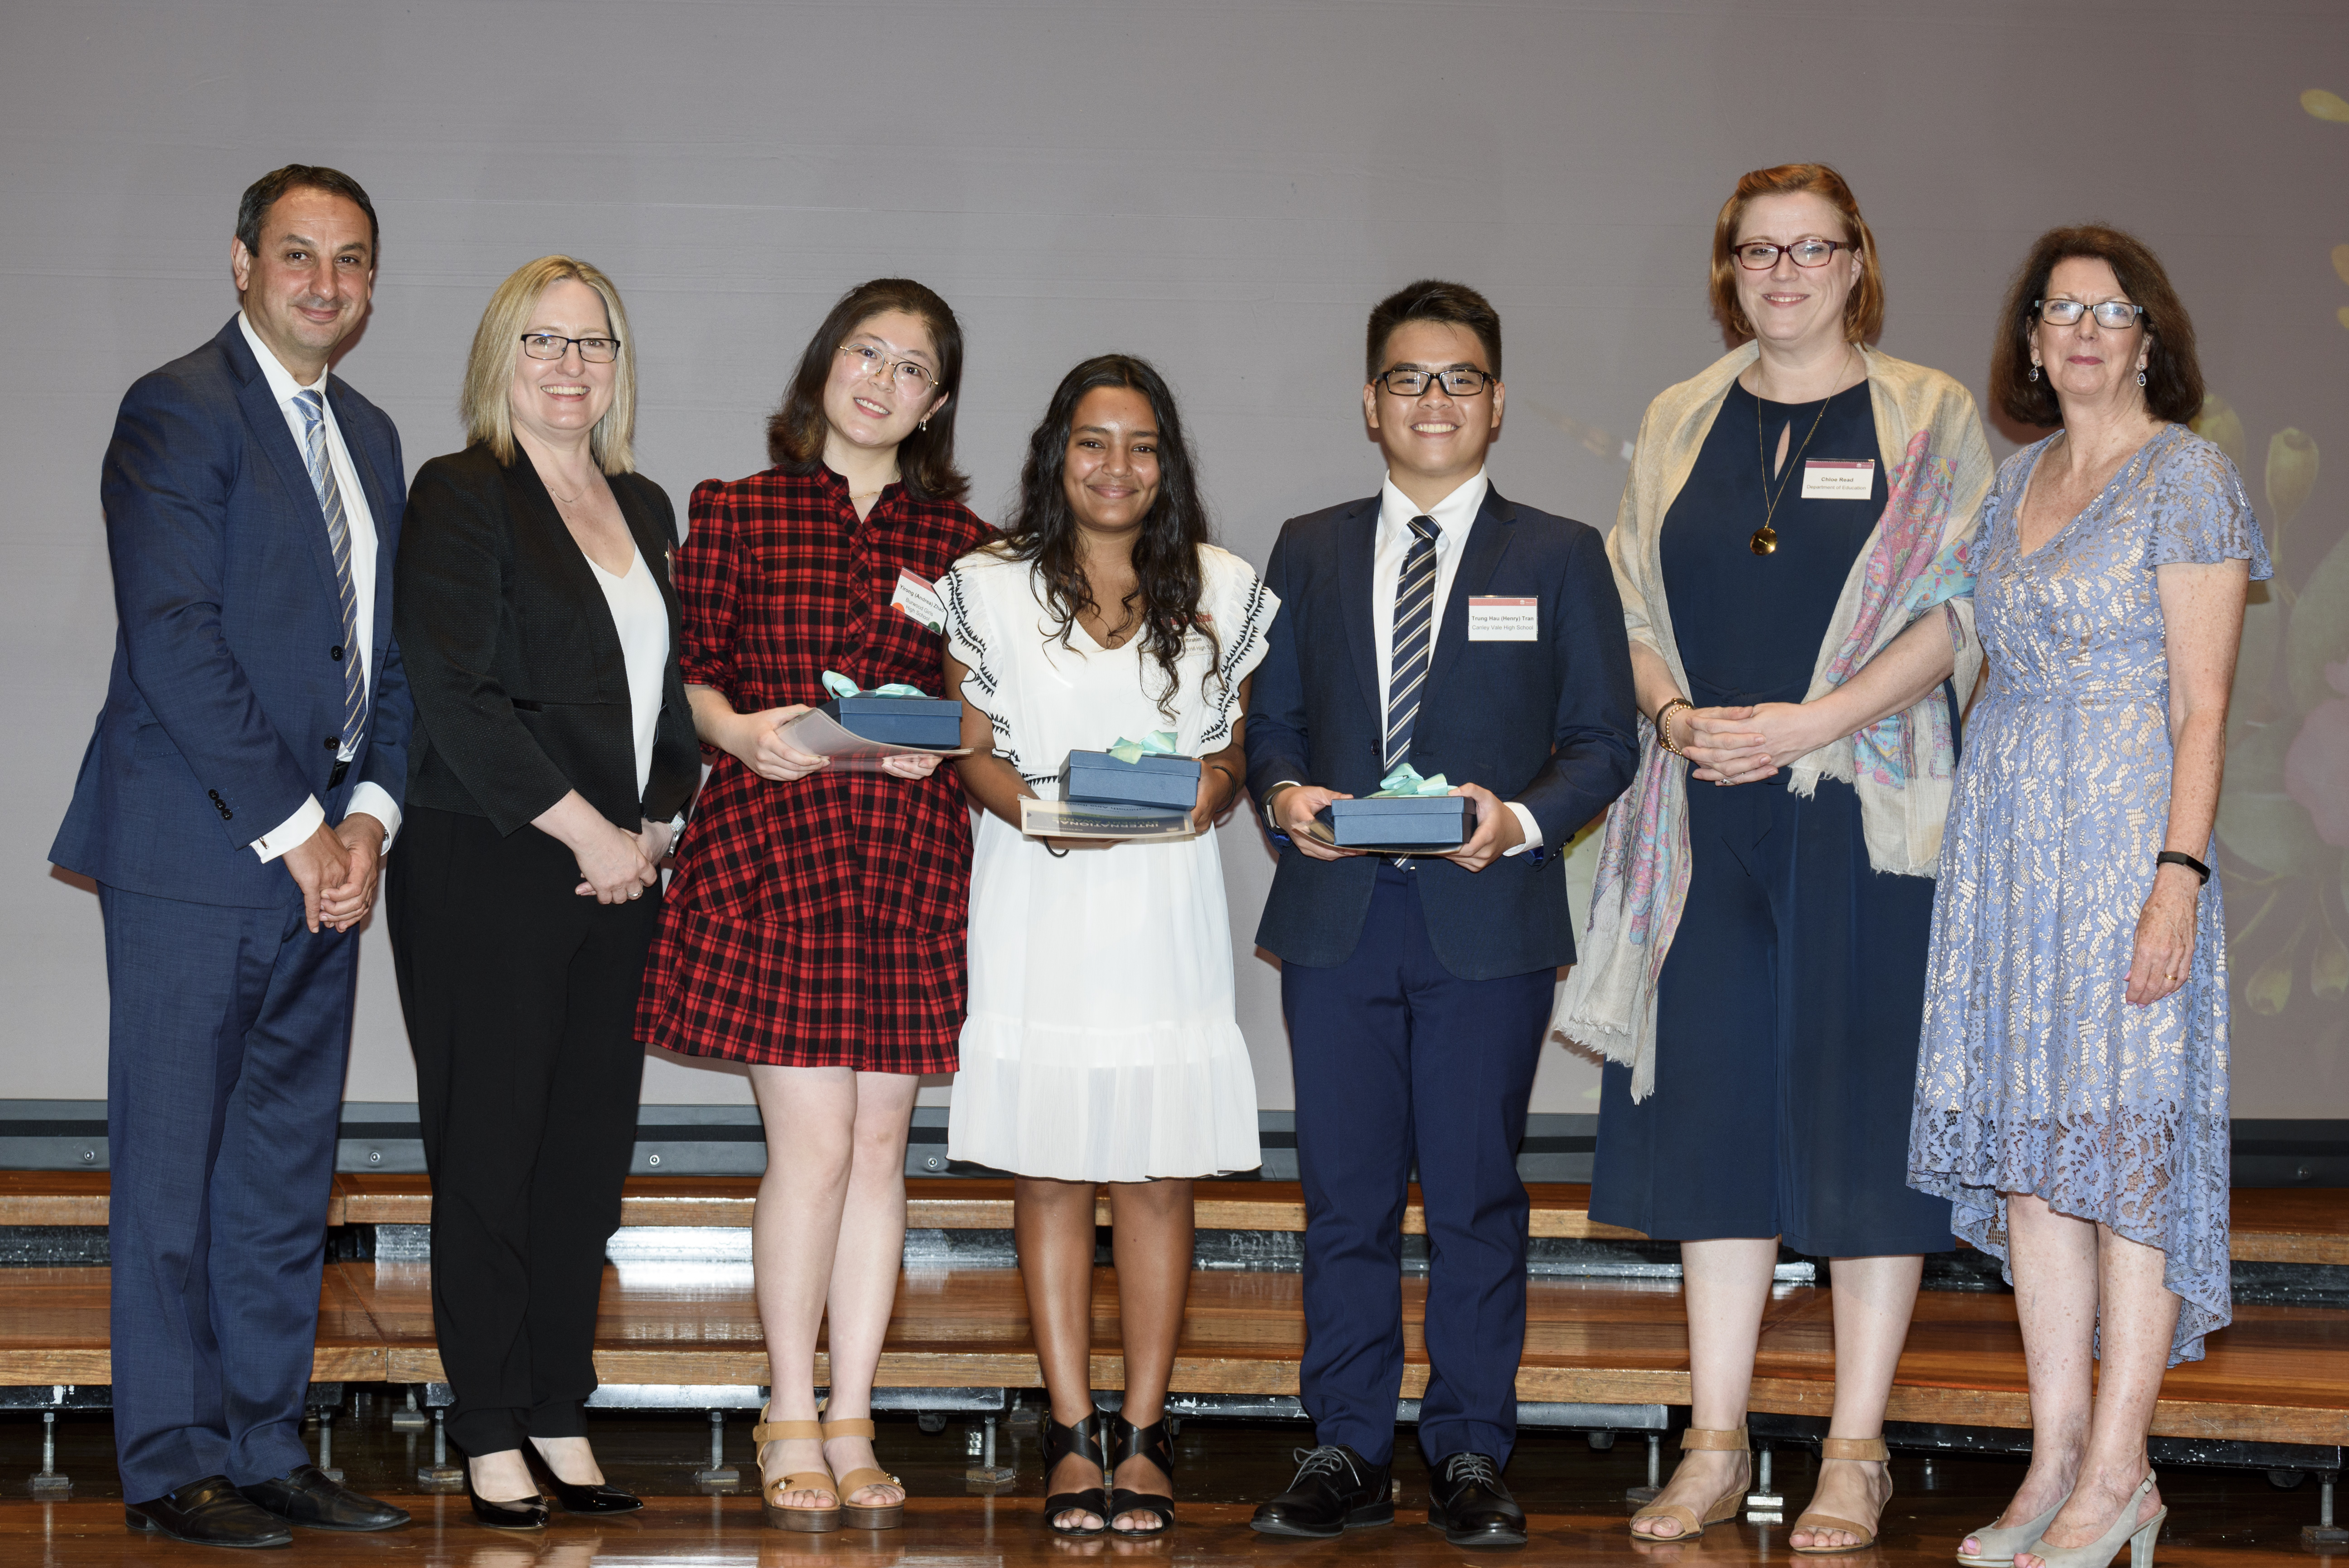 2019 International Student Award winners and officials